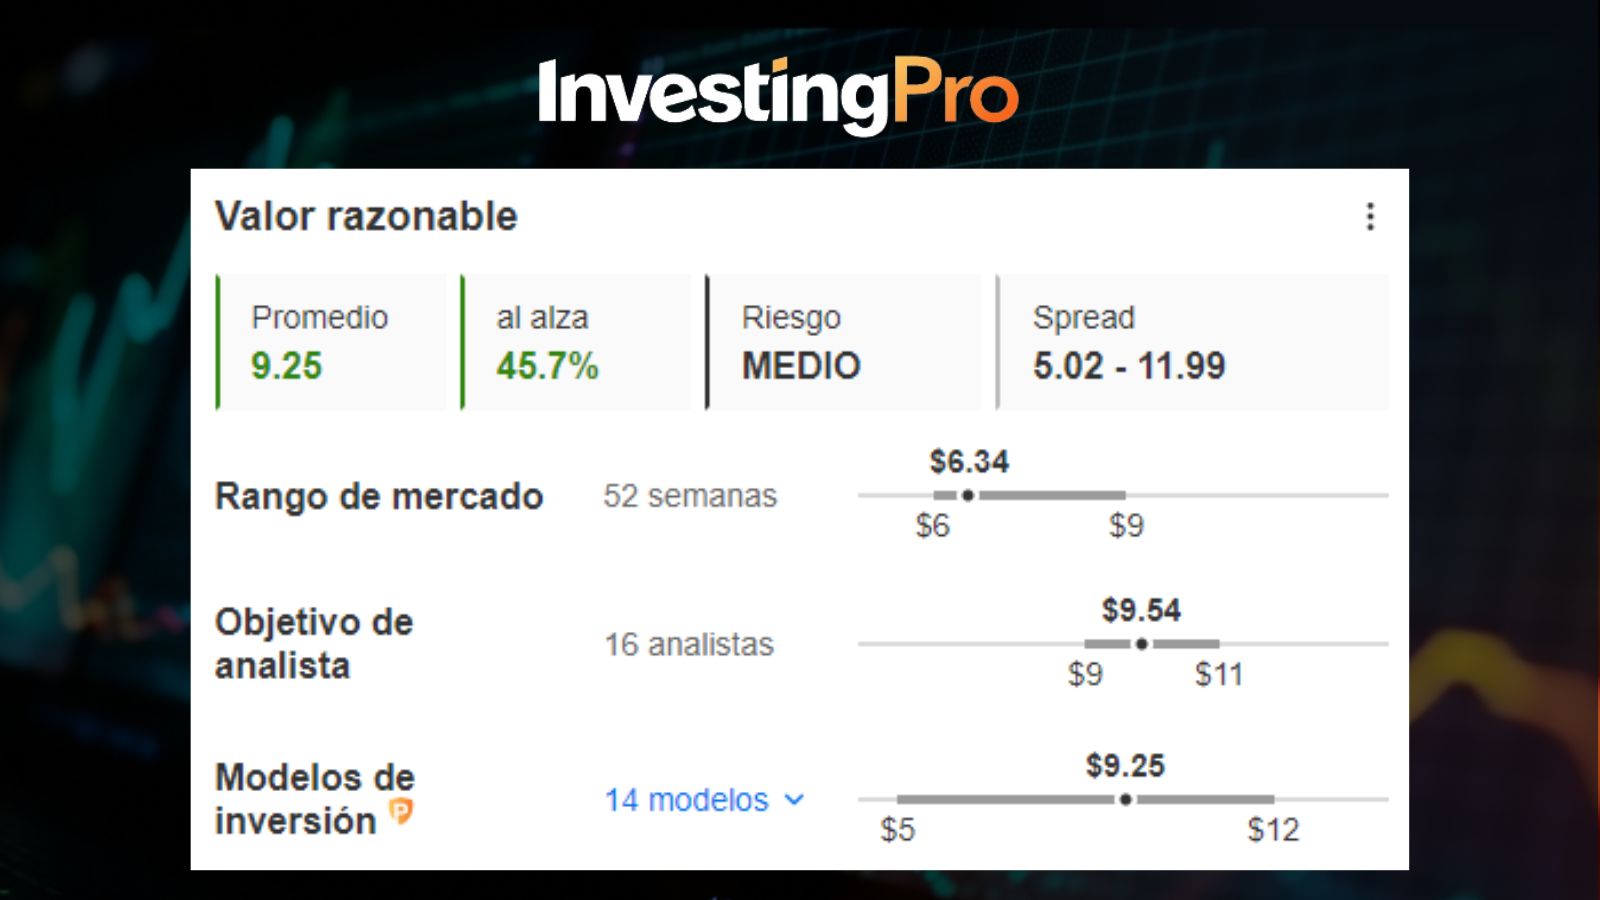 Valor Razonable de Cemex / InvestingPro